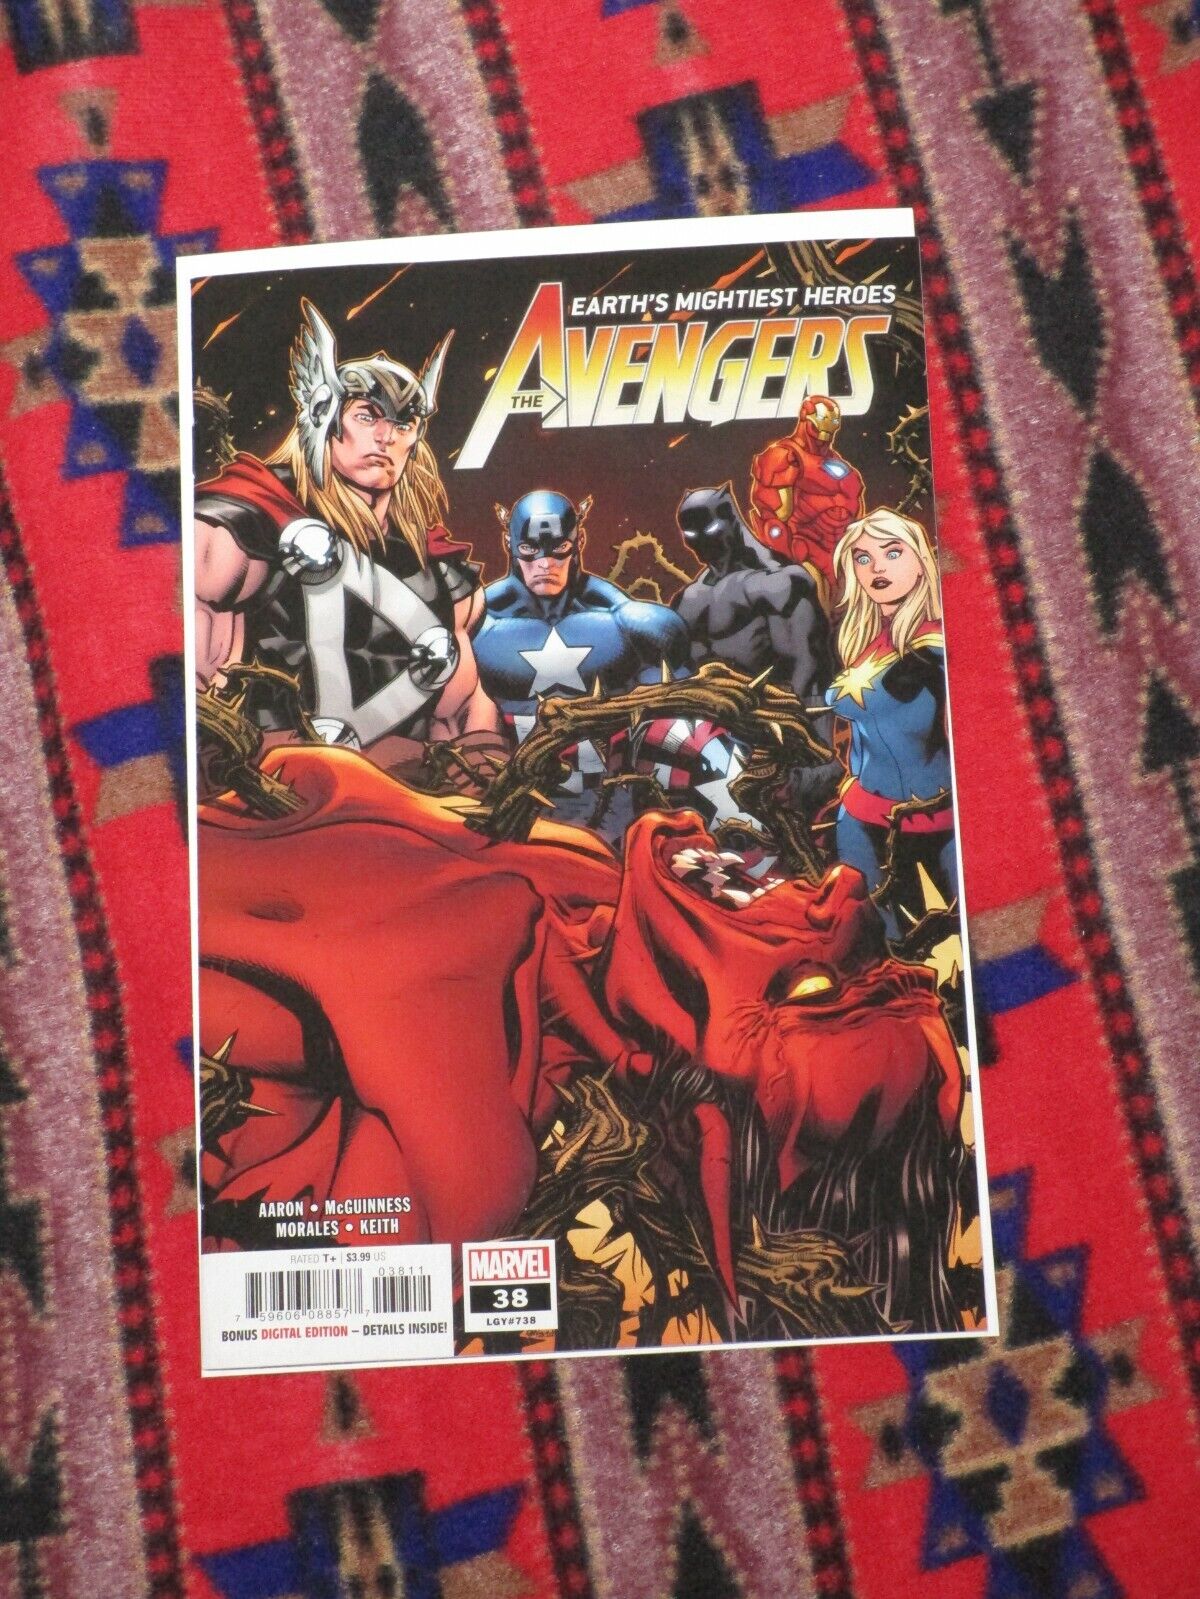 Avengers #38 January 2021 (Jason Aaron and Ed Mcguiness)